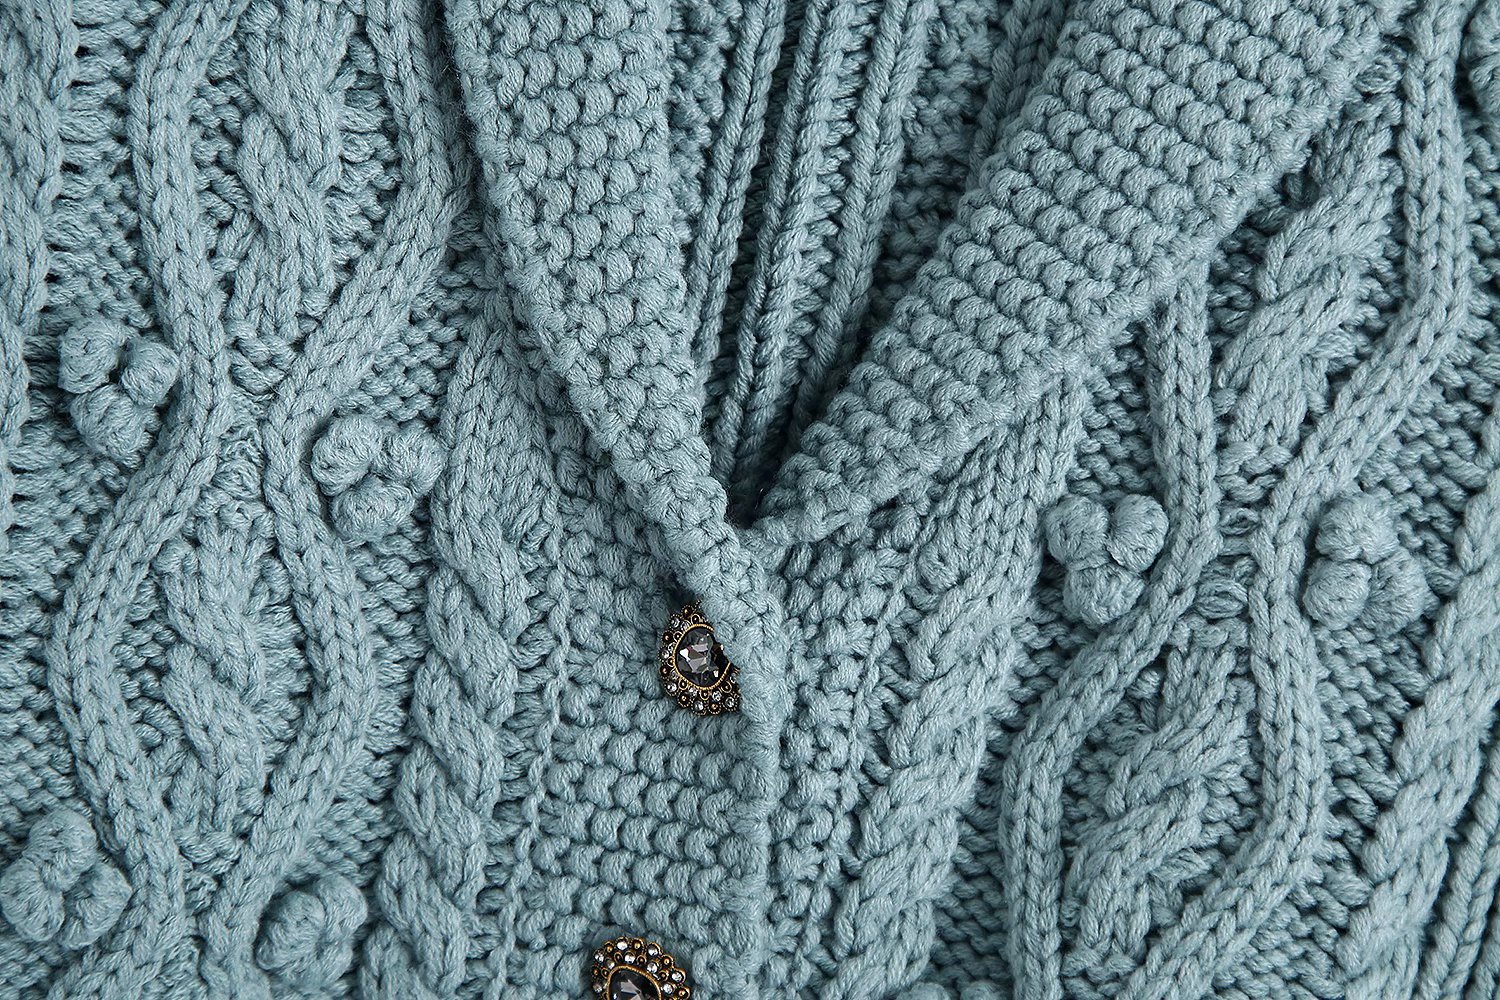 spring eight-strand knitted vest  NSAM30522